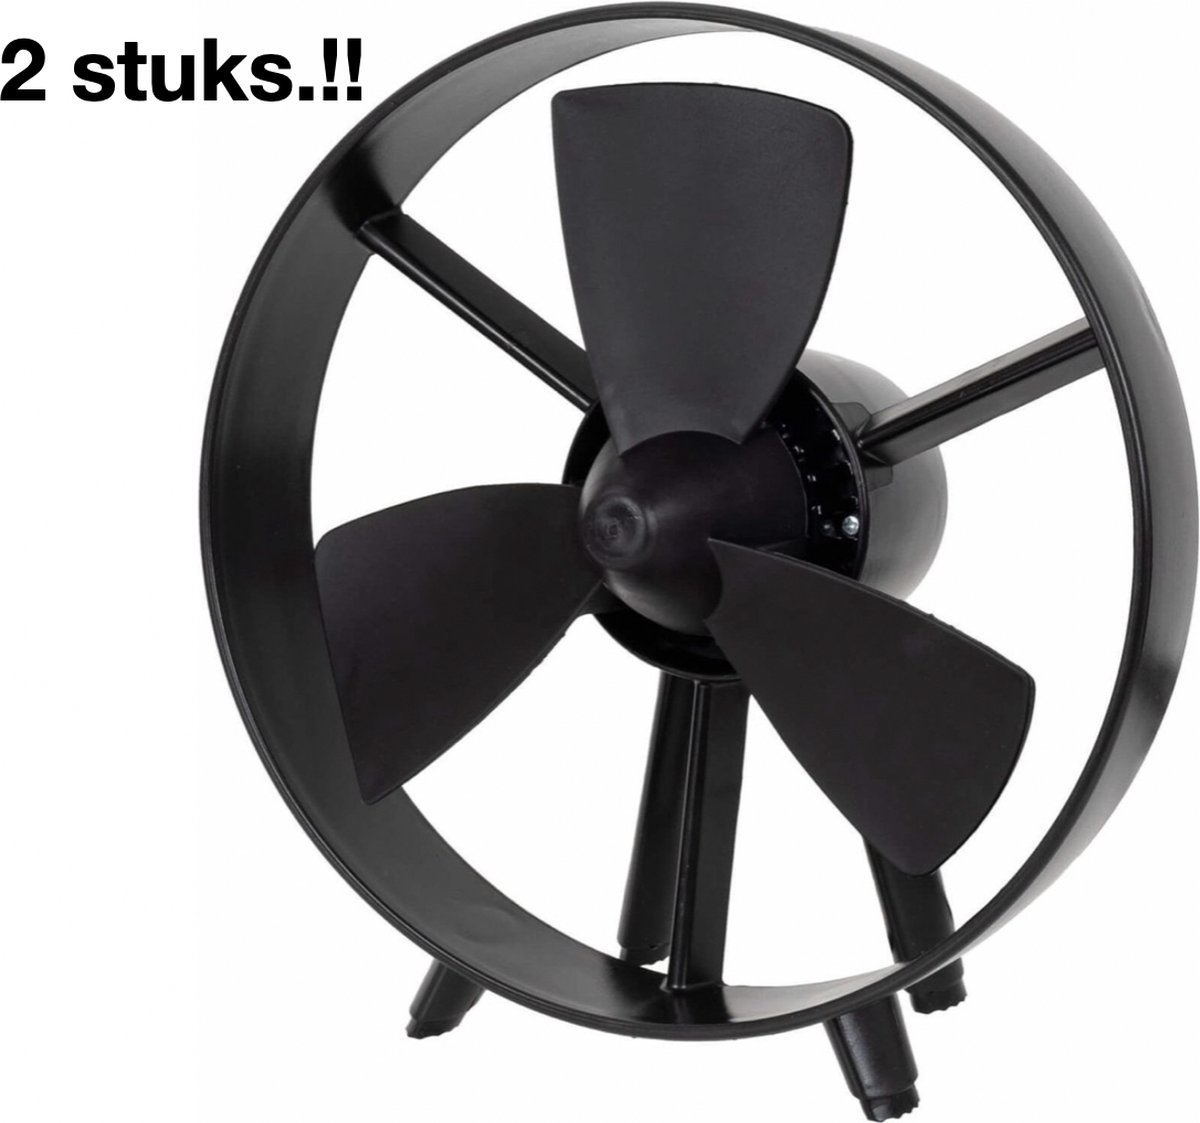 Eurom - Safe-Blade fan black - 2 Stuks.!! - ventilator